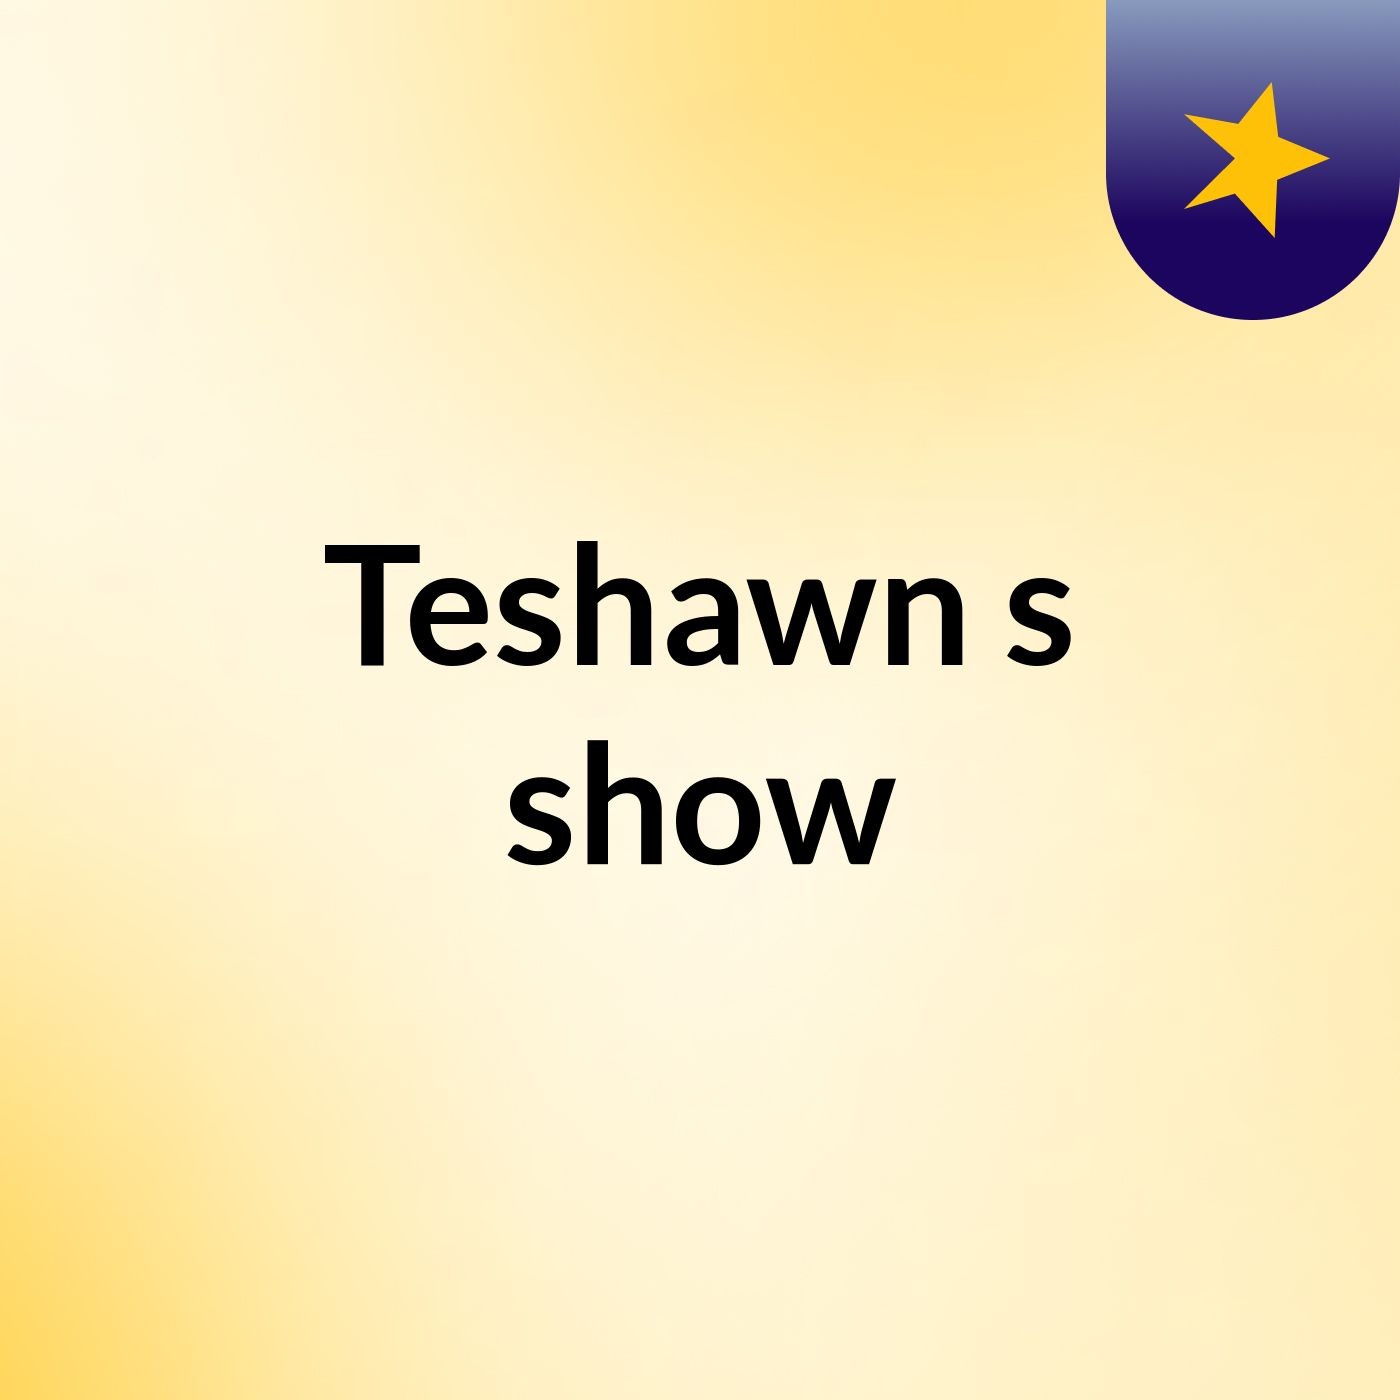 Teshawn's show